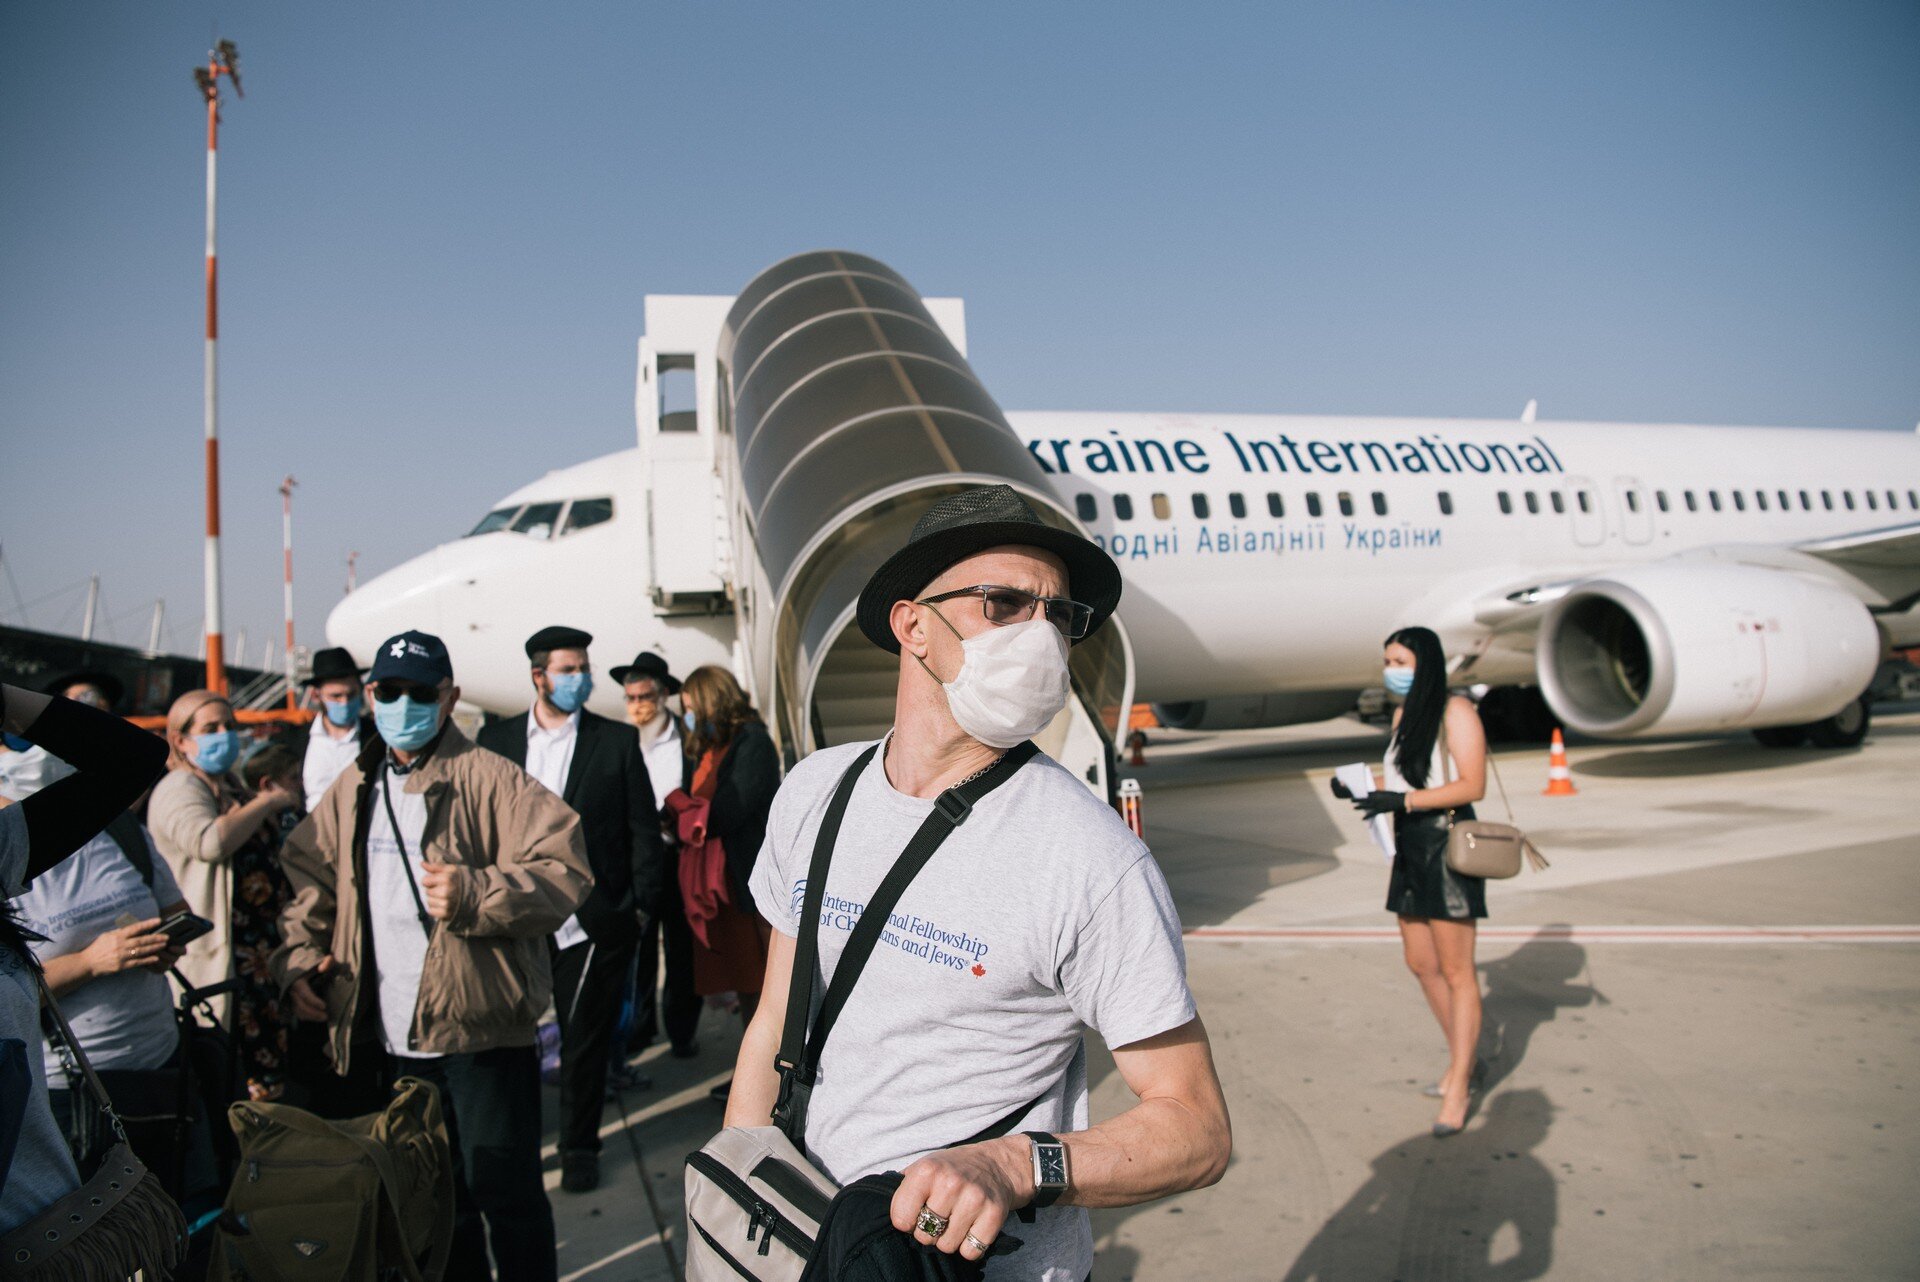 May 19. Israel, Ben Gurion airport